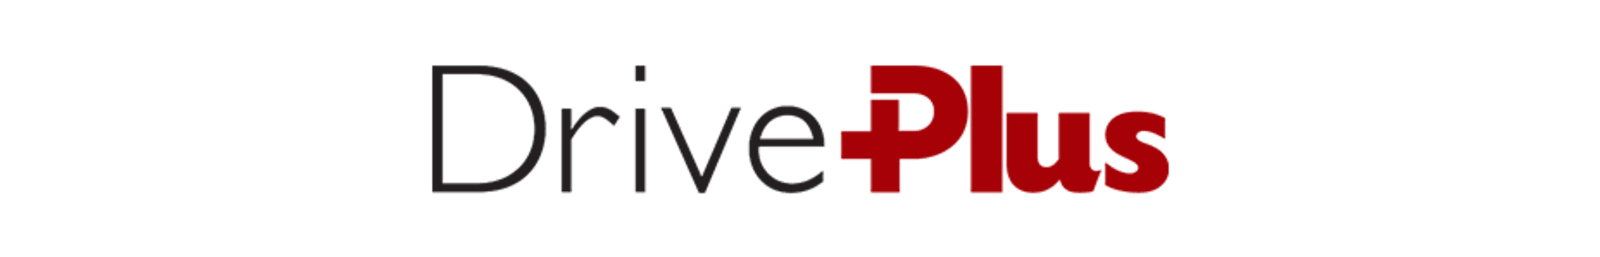 DrivePlus logo